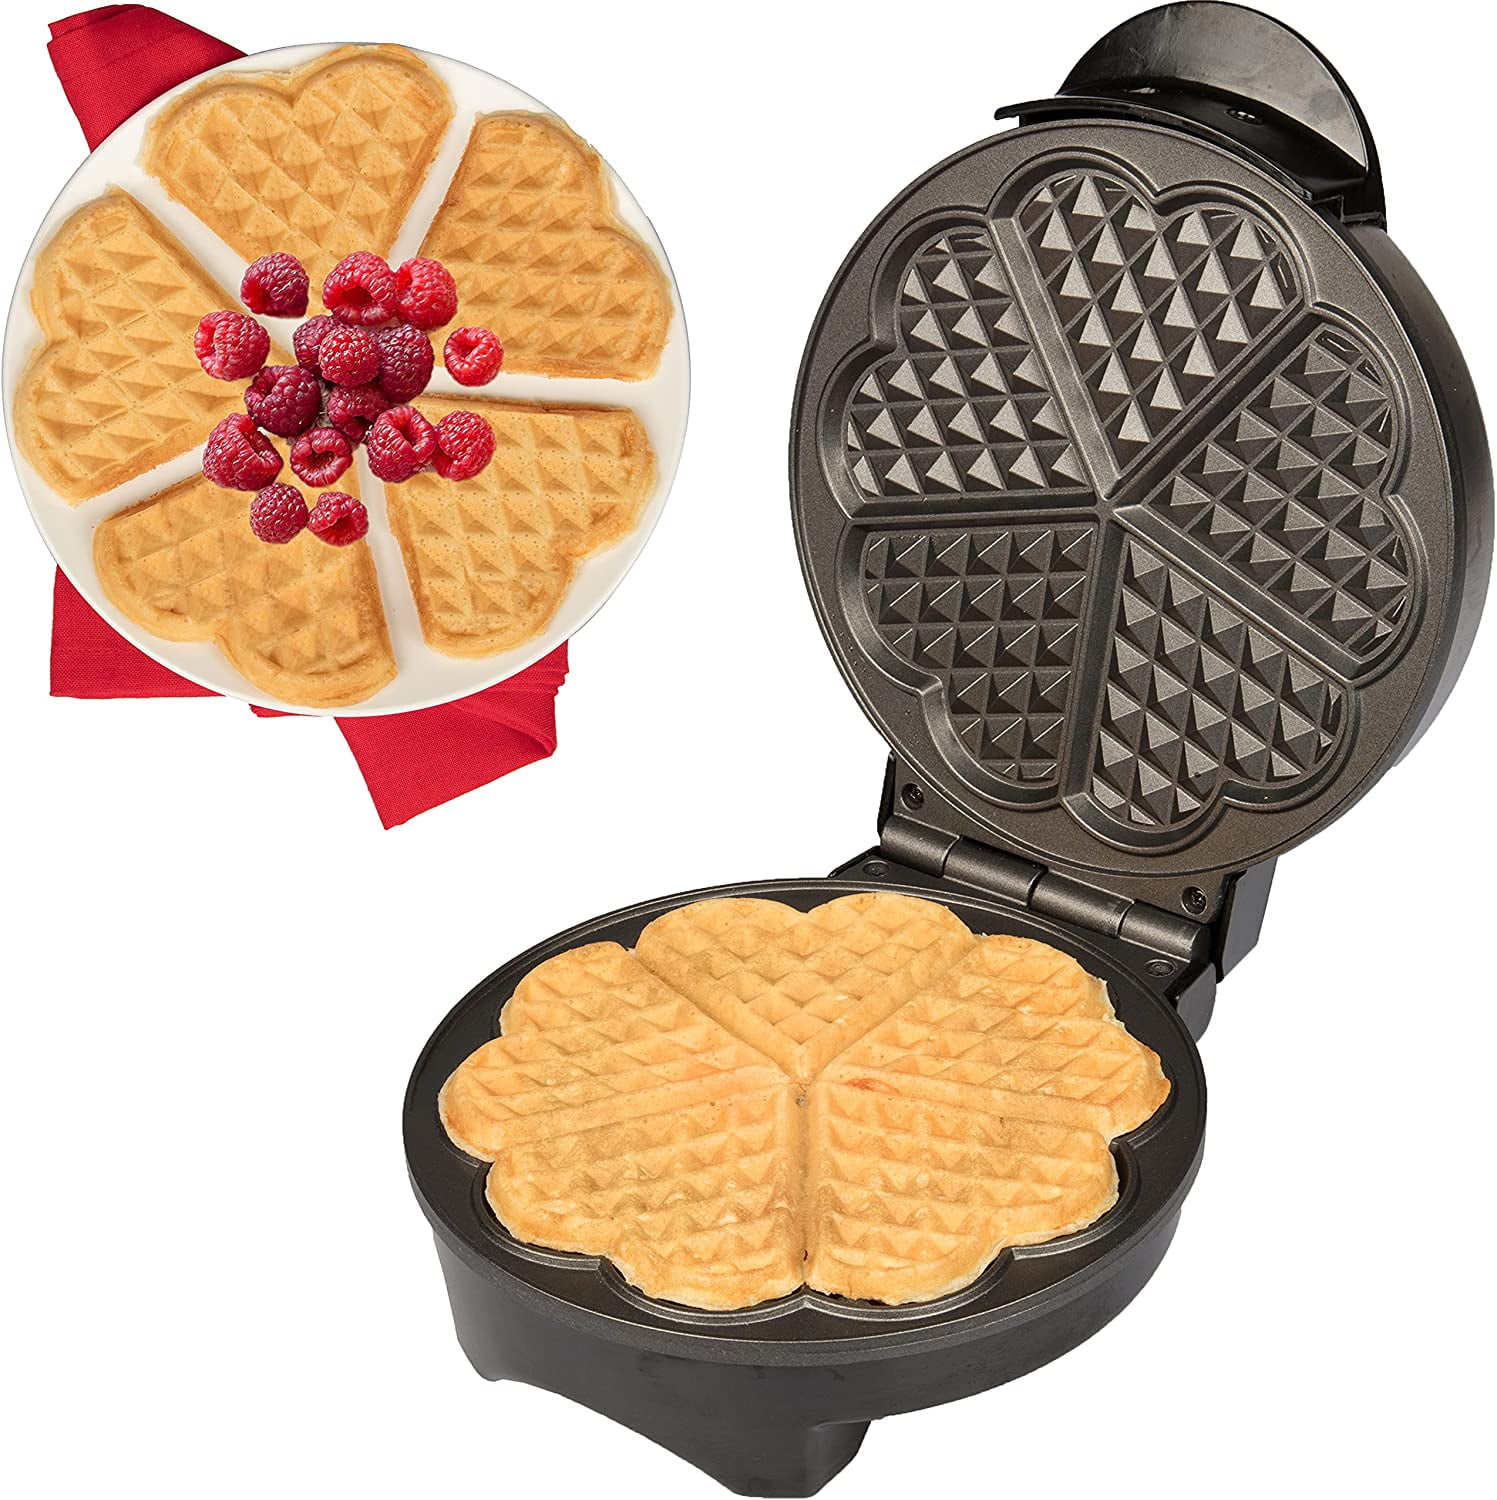 5 Heart-shaped Waffles BAIXING Heart Waffle Maker Non-stick Waffle Griddle Iron 